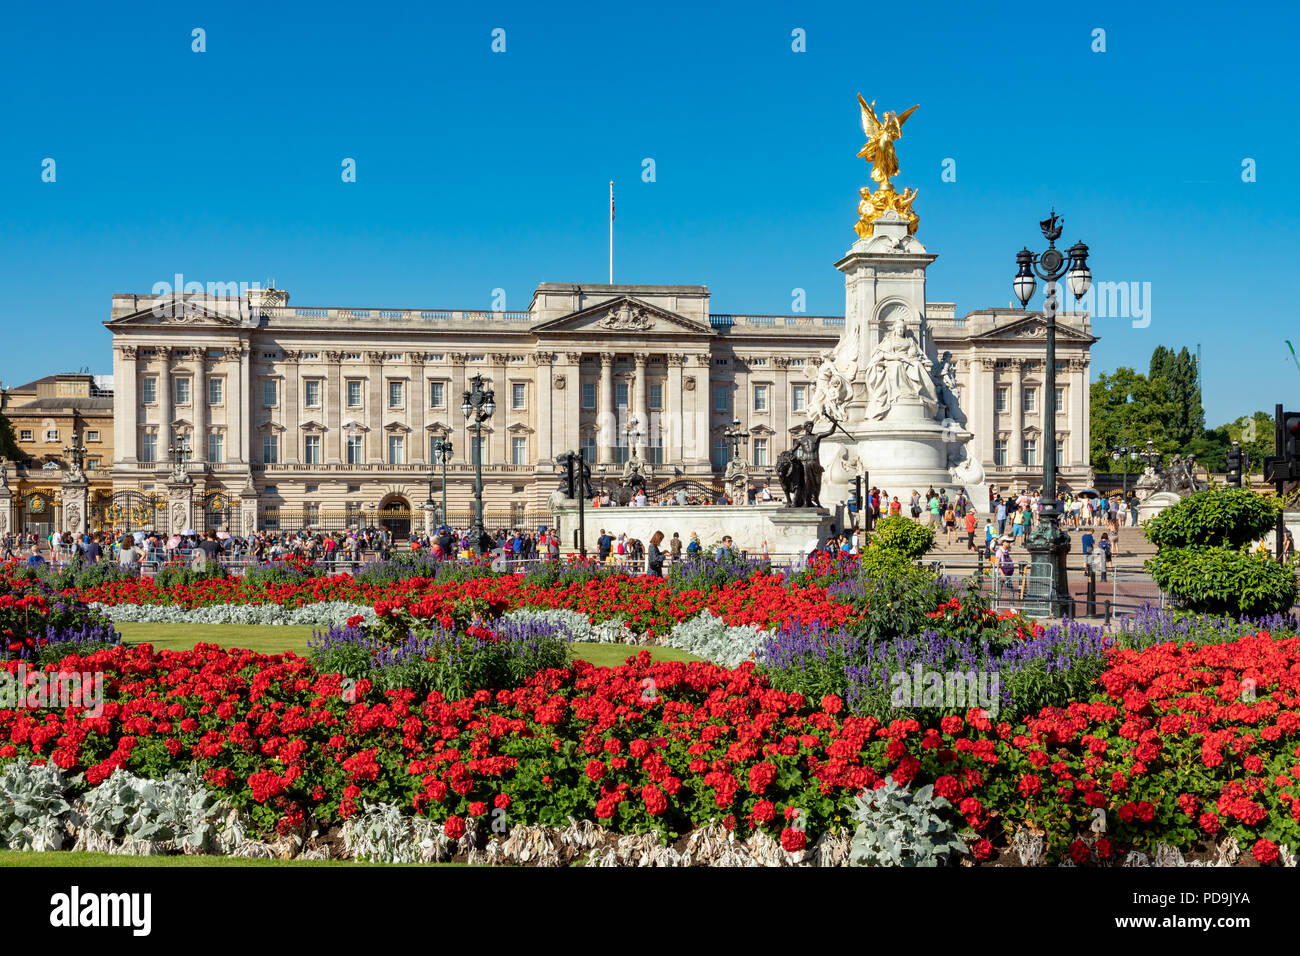 Londra Inghilterra 05 agosto 2018 bellissimo display floreali fuori Buckingham Palace la residenza londinese di Sua Maestà la Regina Elisabetta 2a Foto Stock